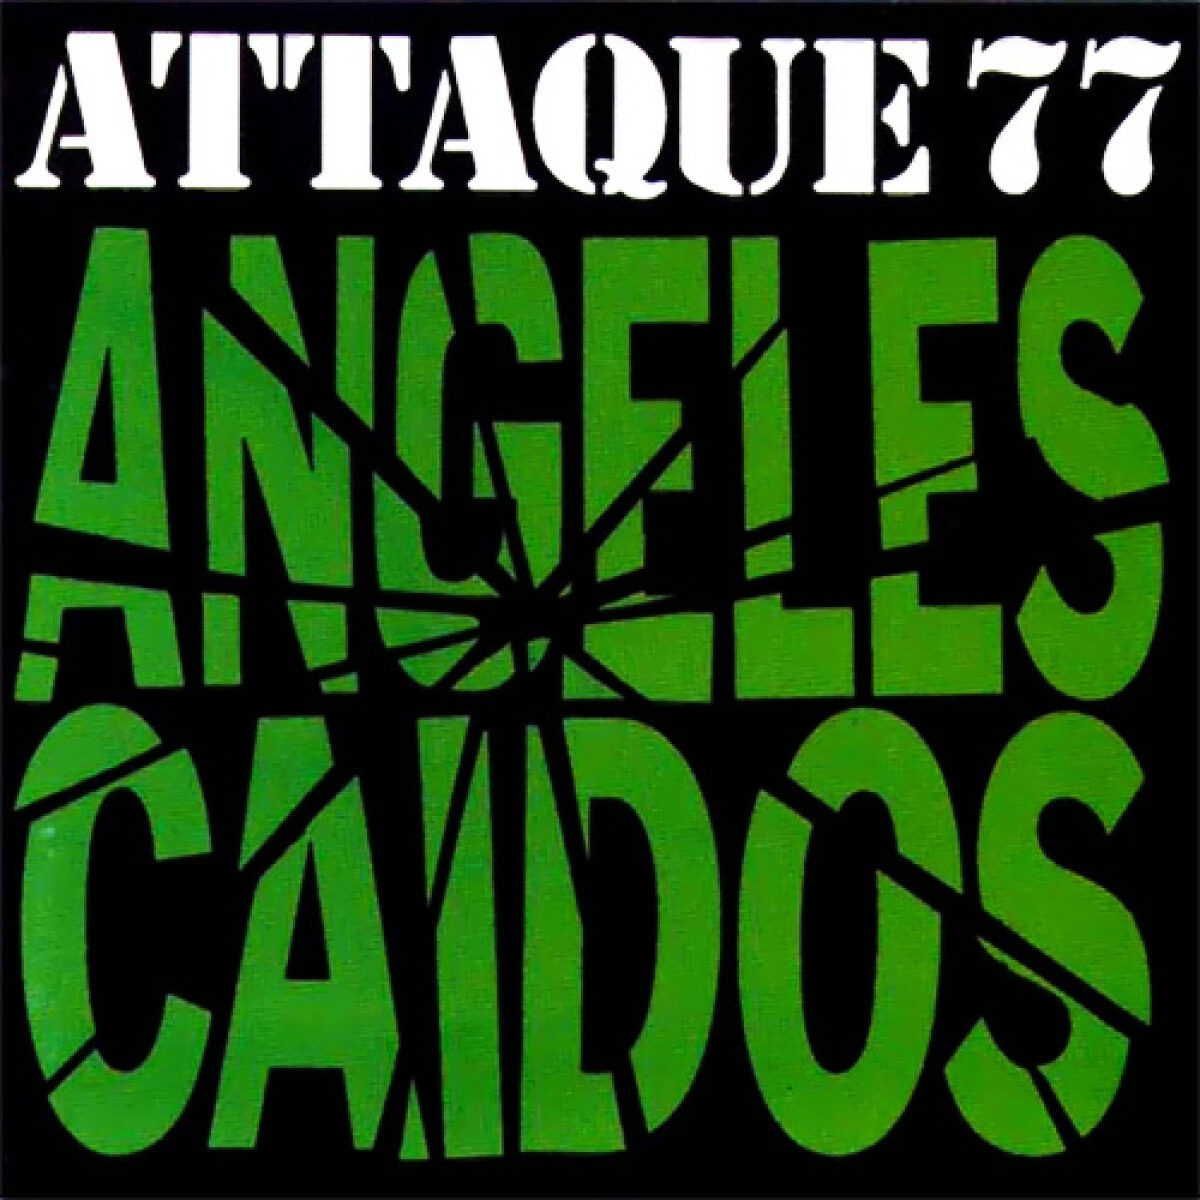 Attaque 77-angeles Caidos 